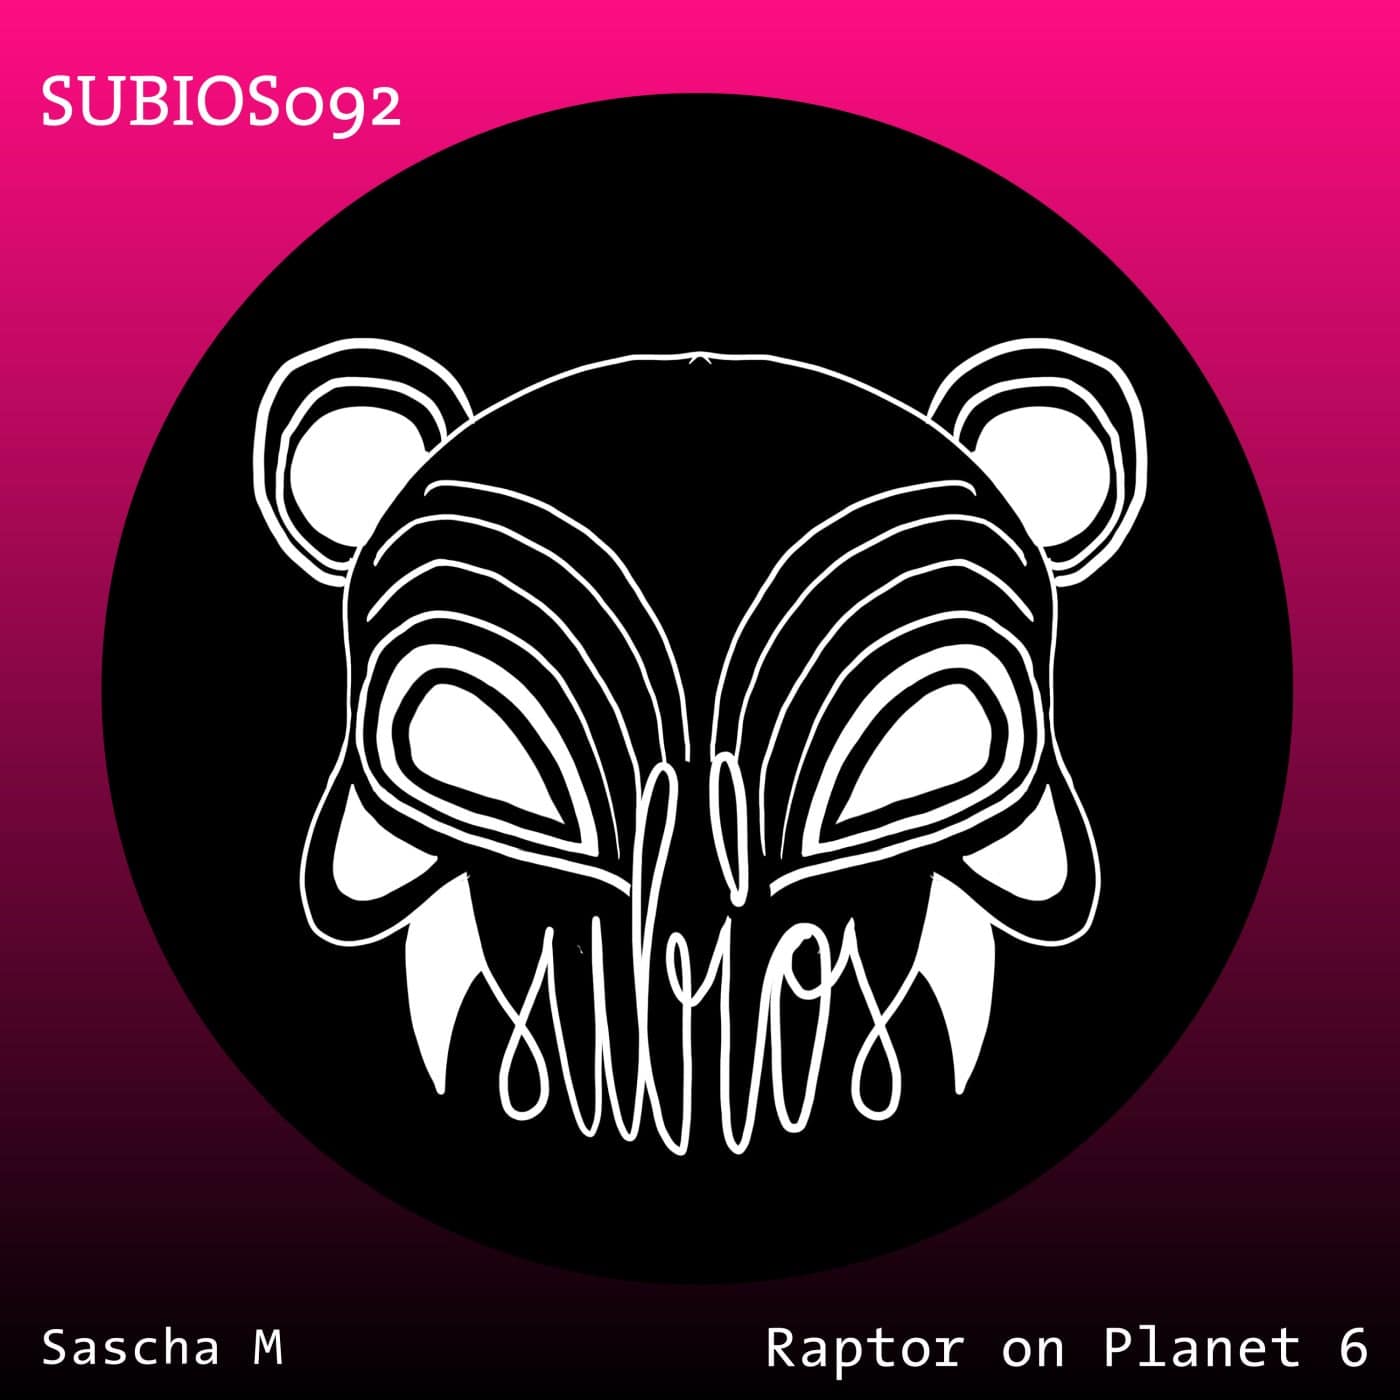 image cover: Sascha M - Raptor on Planet 6 / SUBIOS092